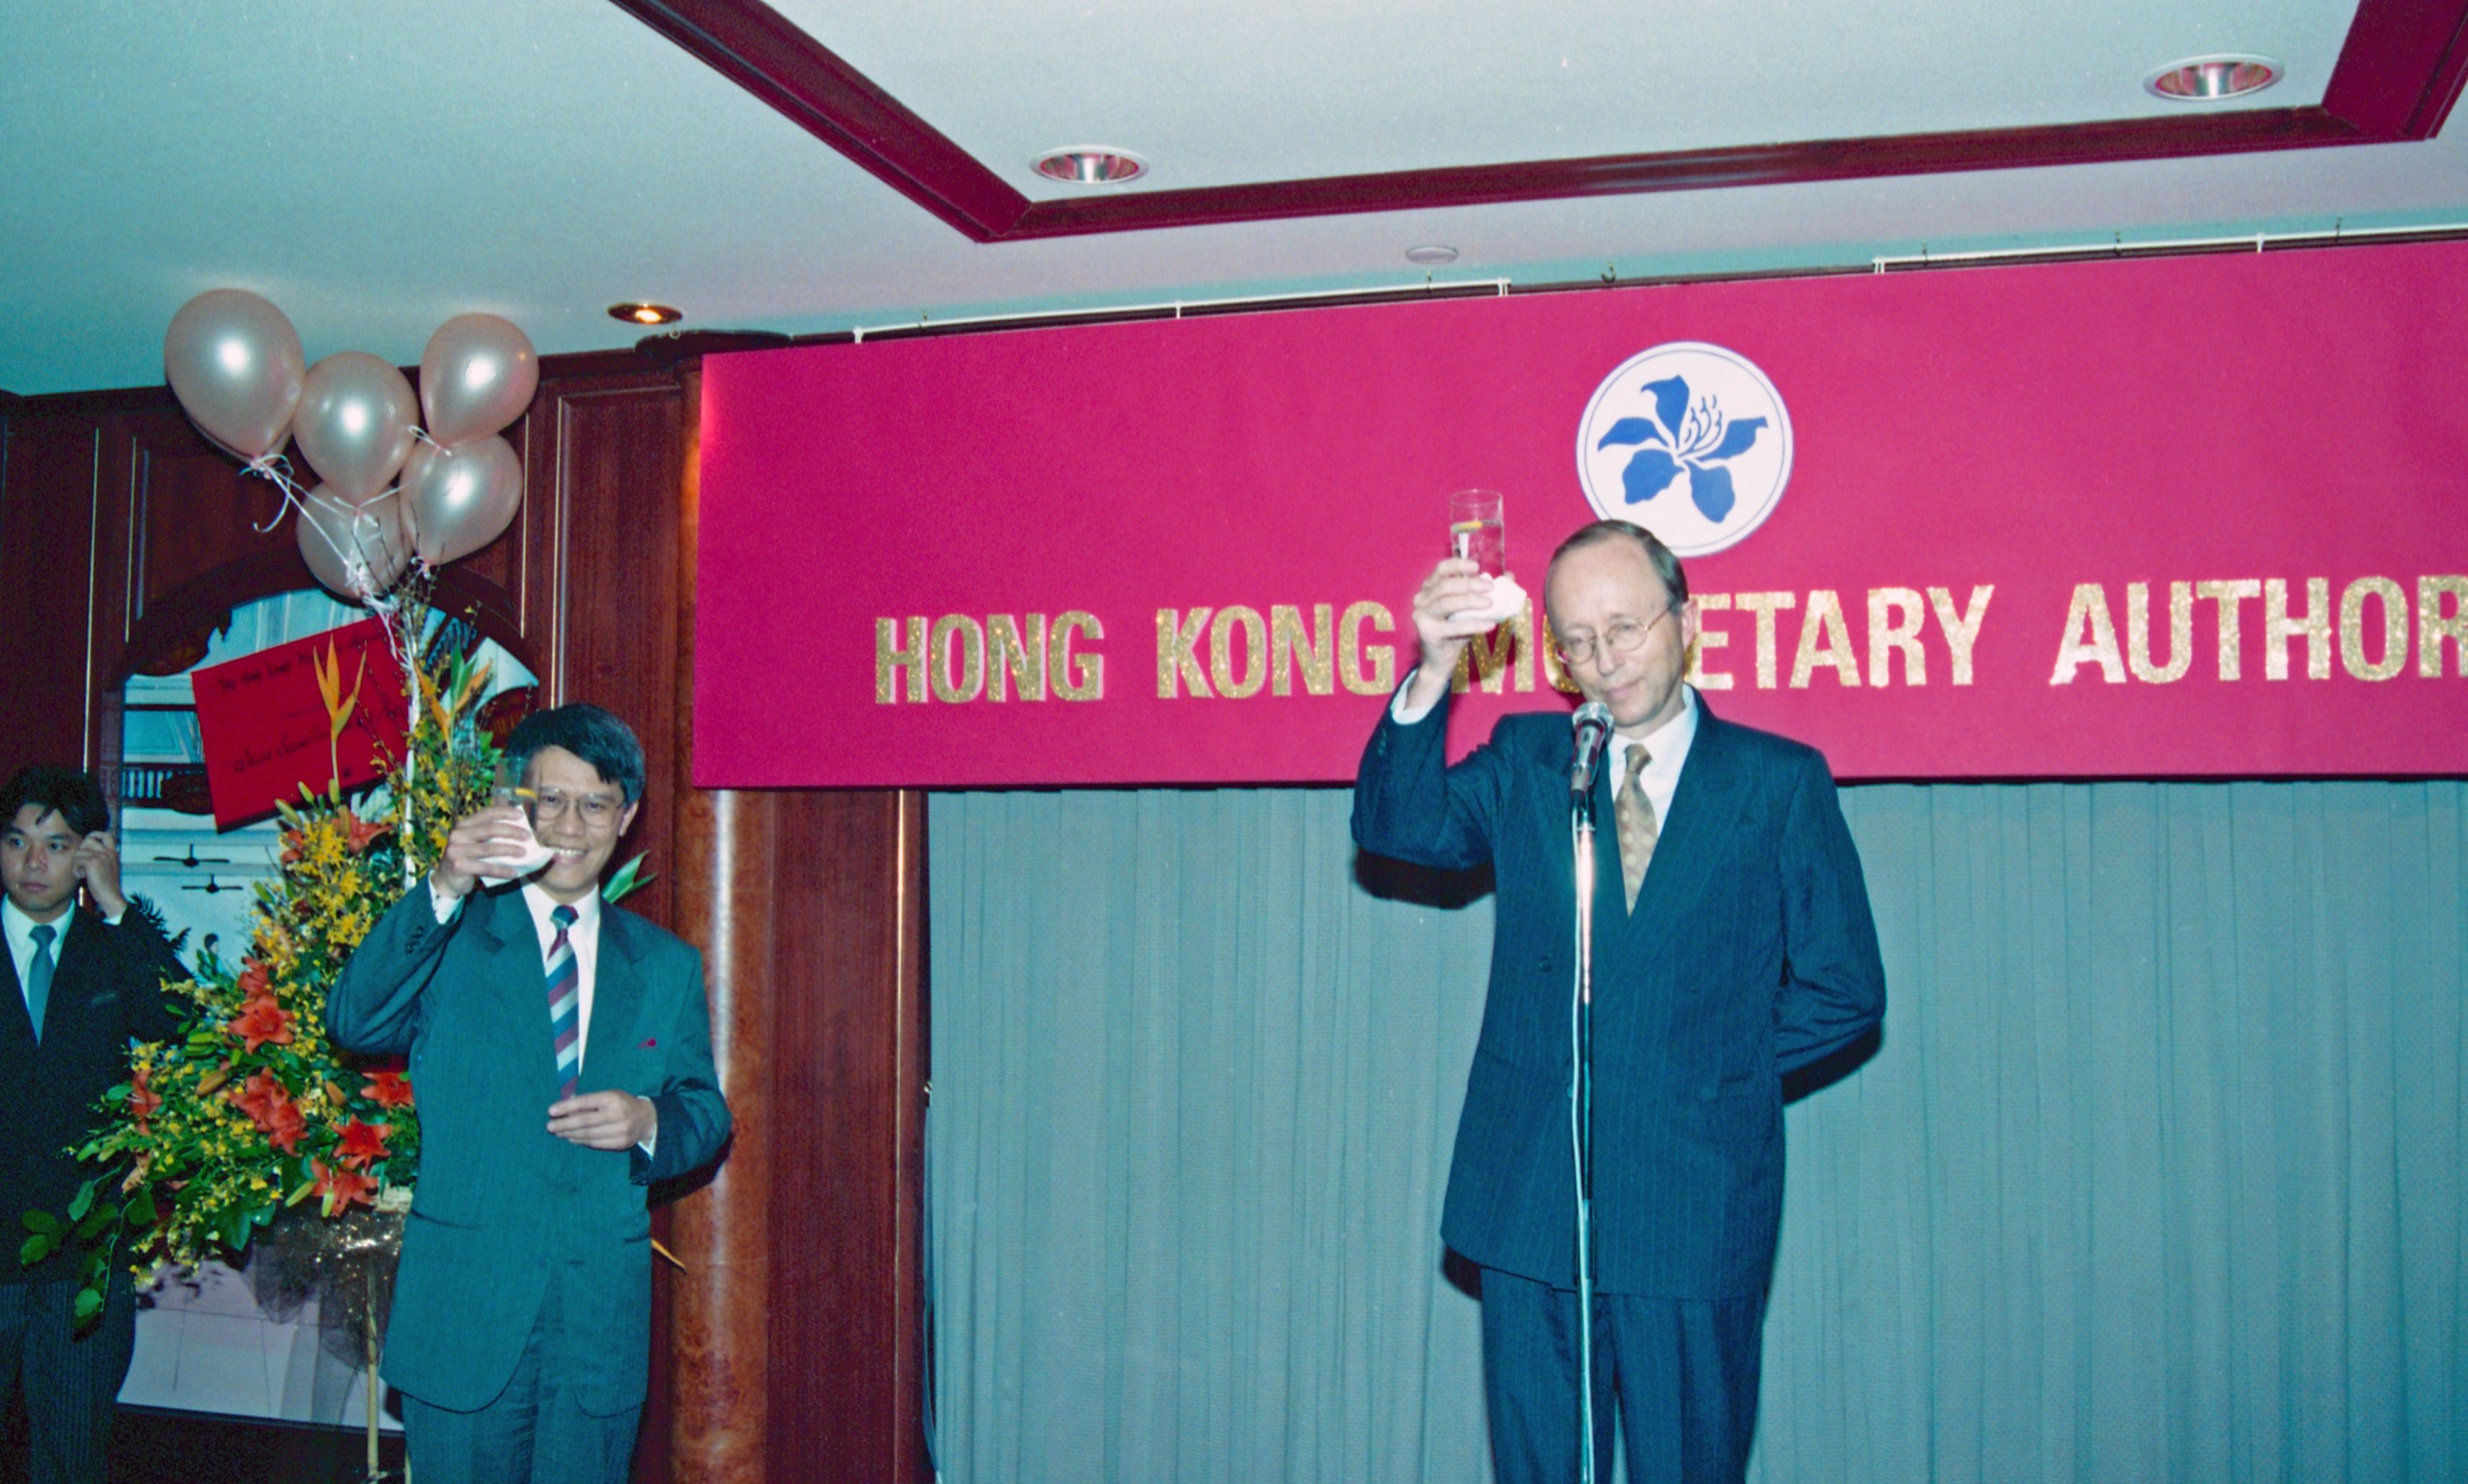 The Hong Kong Monetary Authority (HKMA) is established